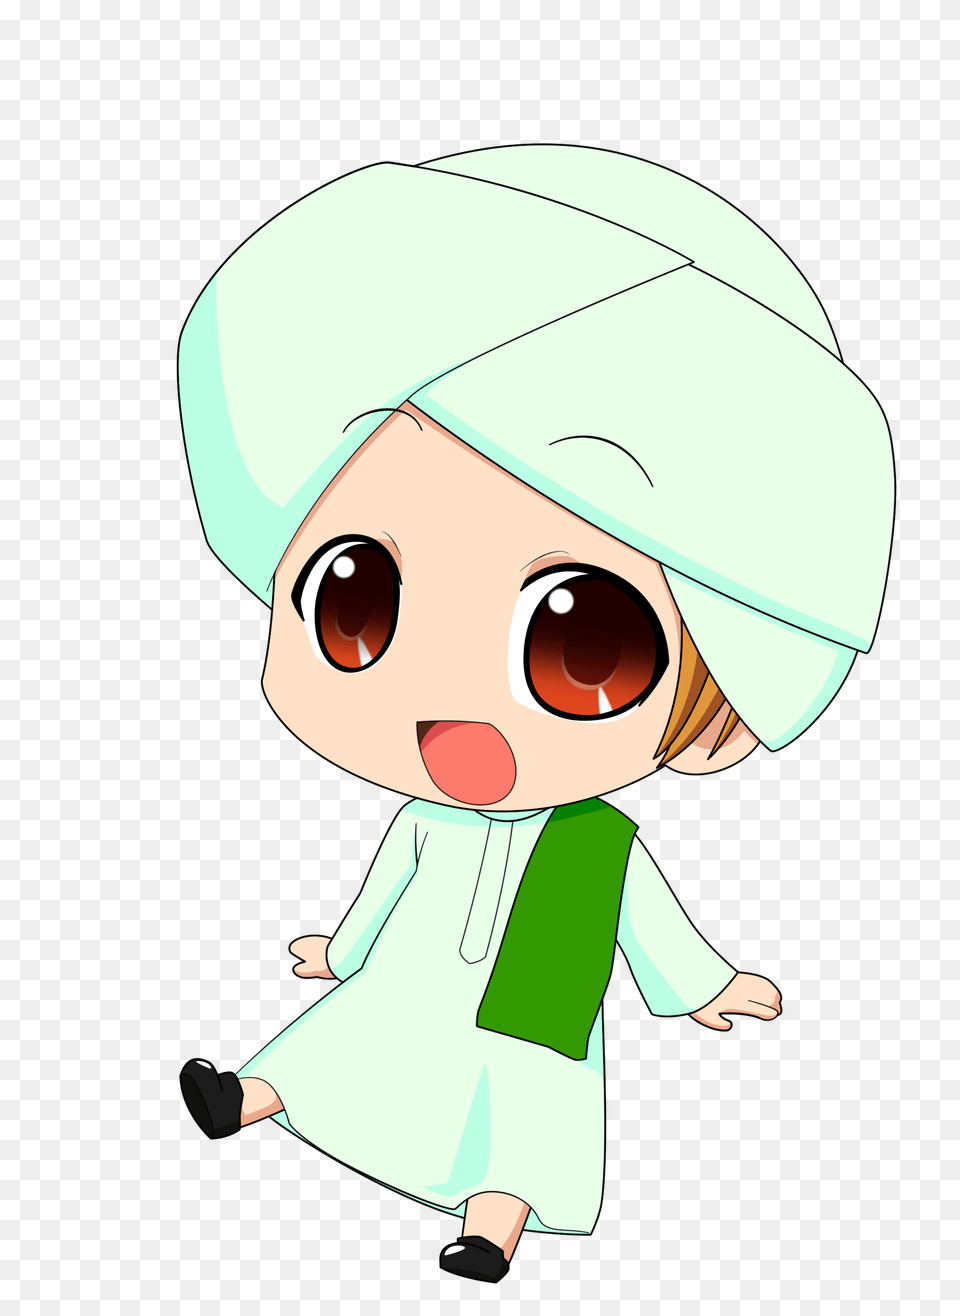 Download Hd Islam Drawing Cute Anime Chibi Muslim Muslim Cute, Baby, Person, Clothing, Hat Png